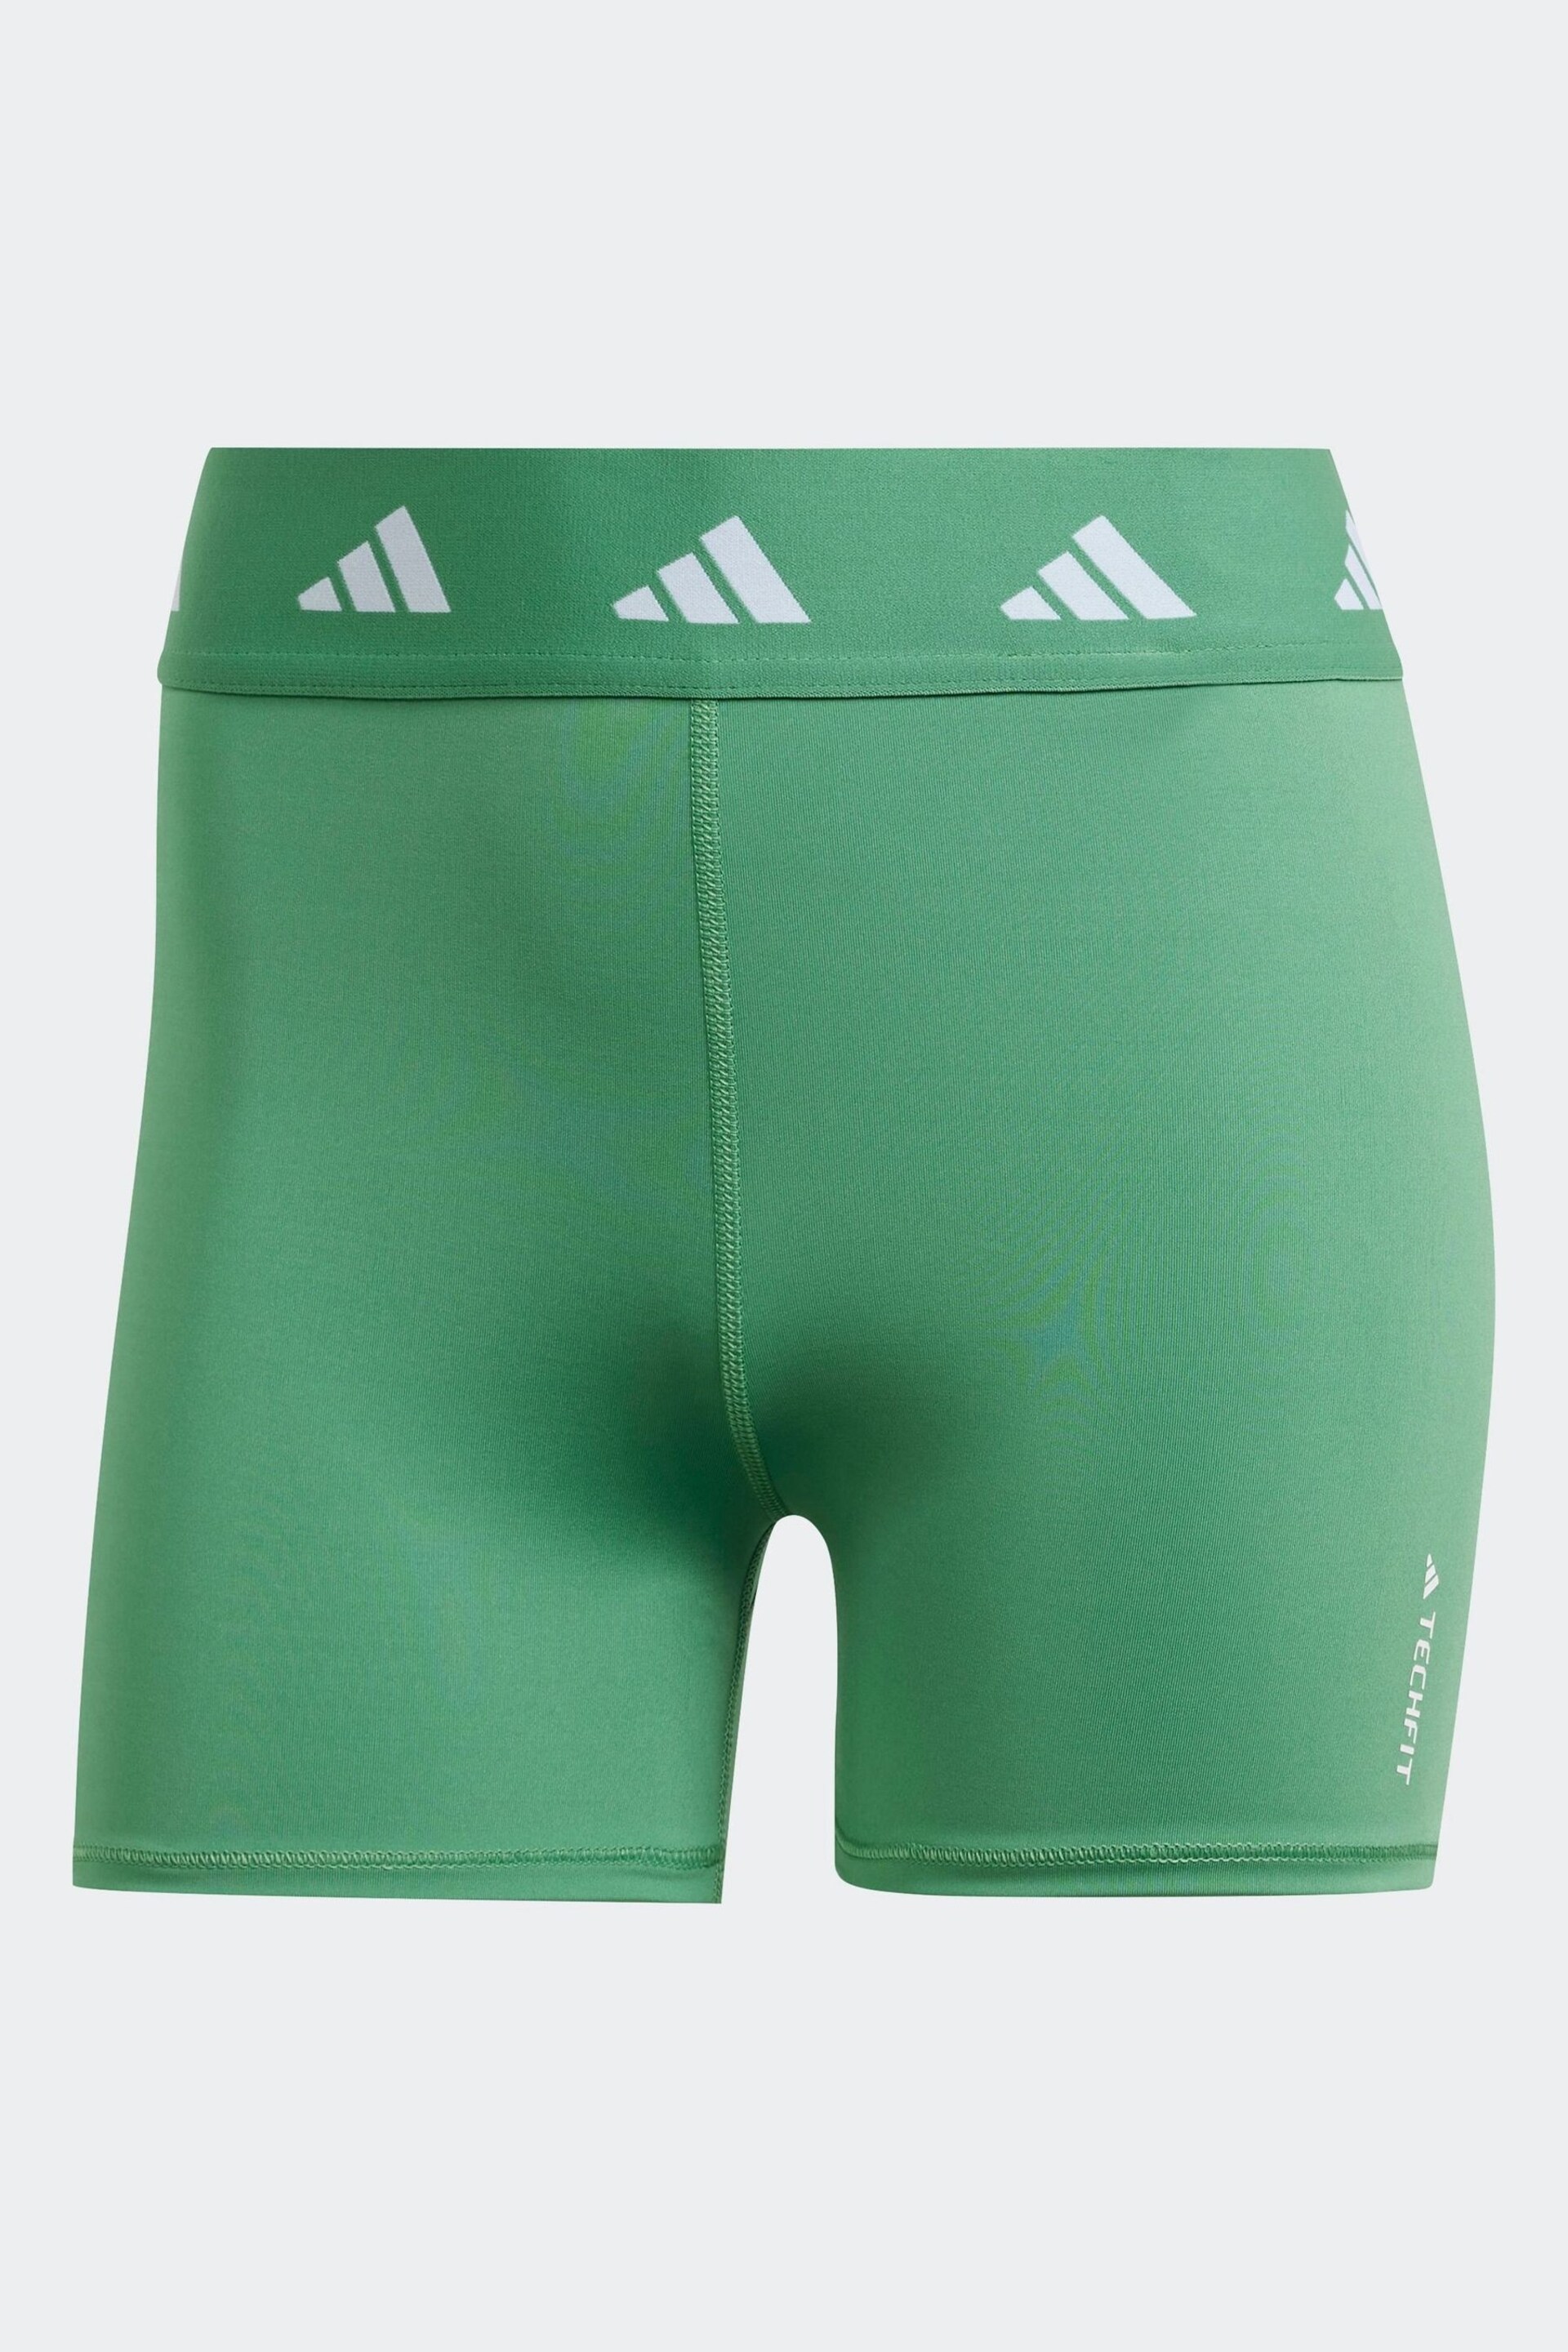 adidas Green Smokey Olive Canvas Techfit Shorts - Image 6 of 6